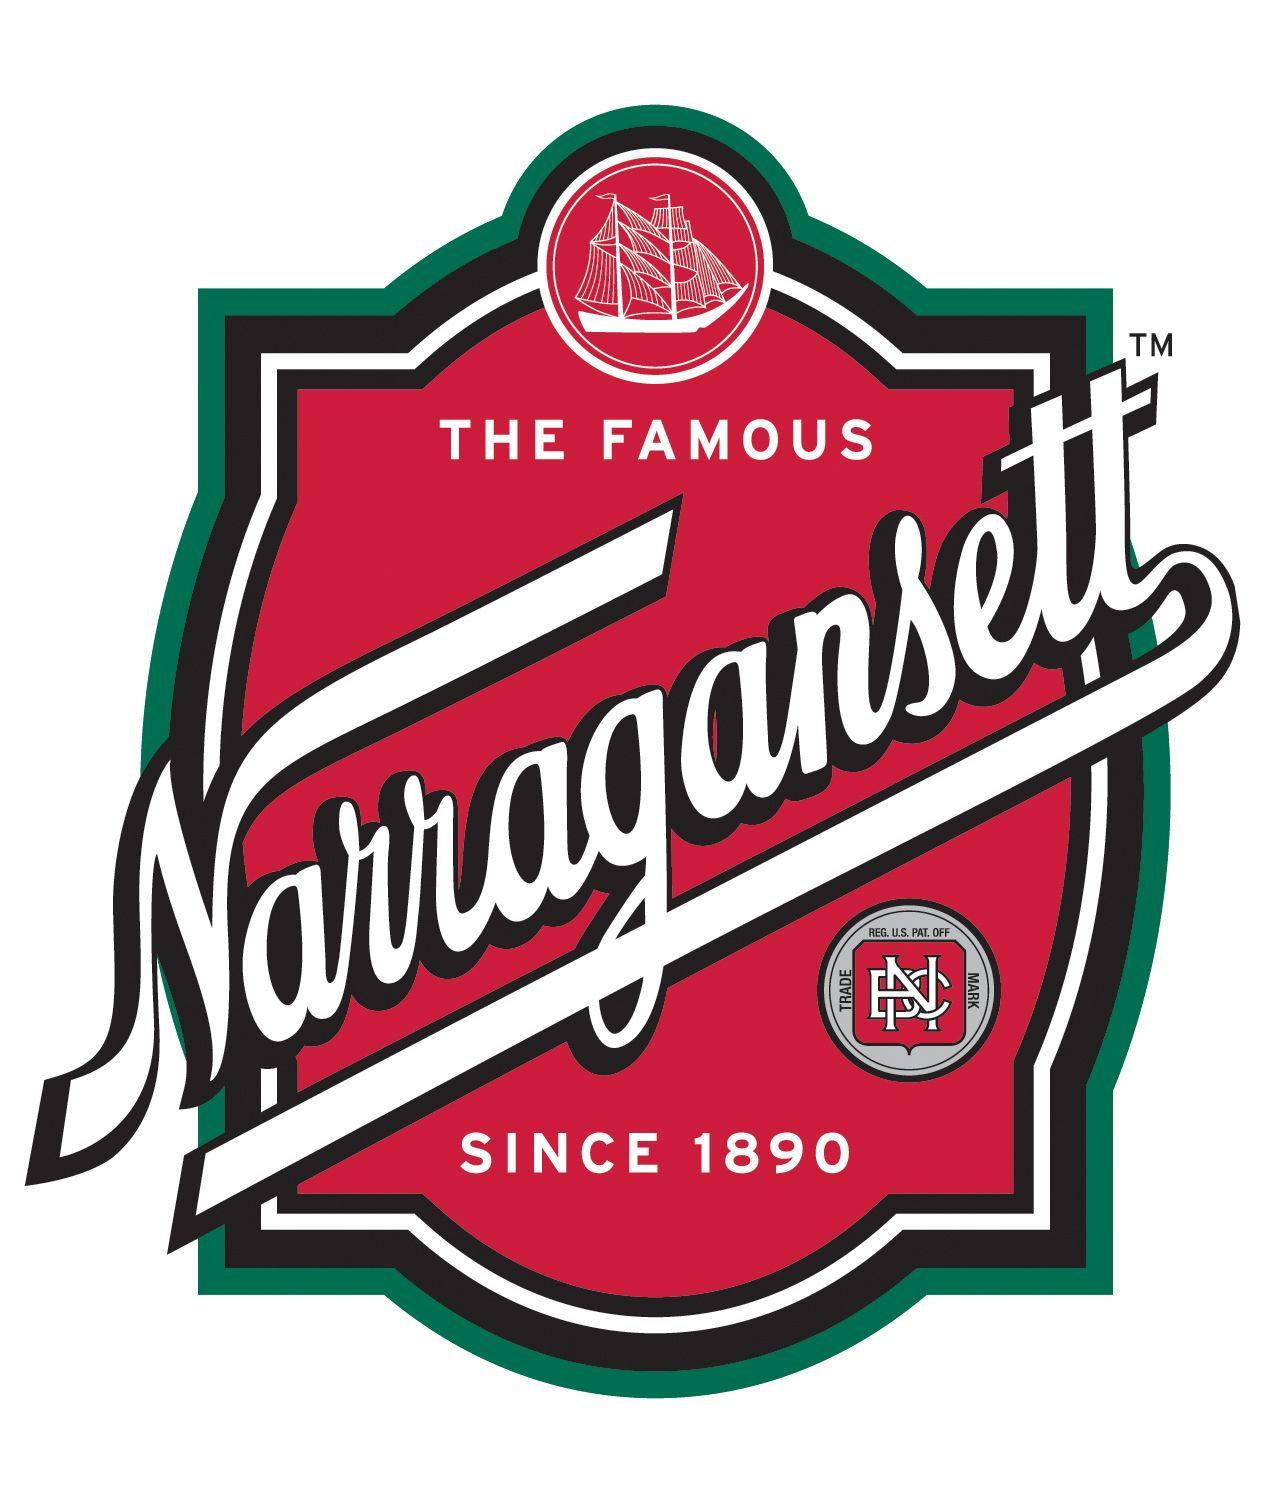 Famous Beer Logo - Narragansett Beer. Hi Neighbor!